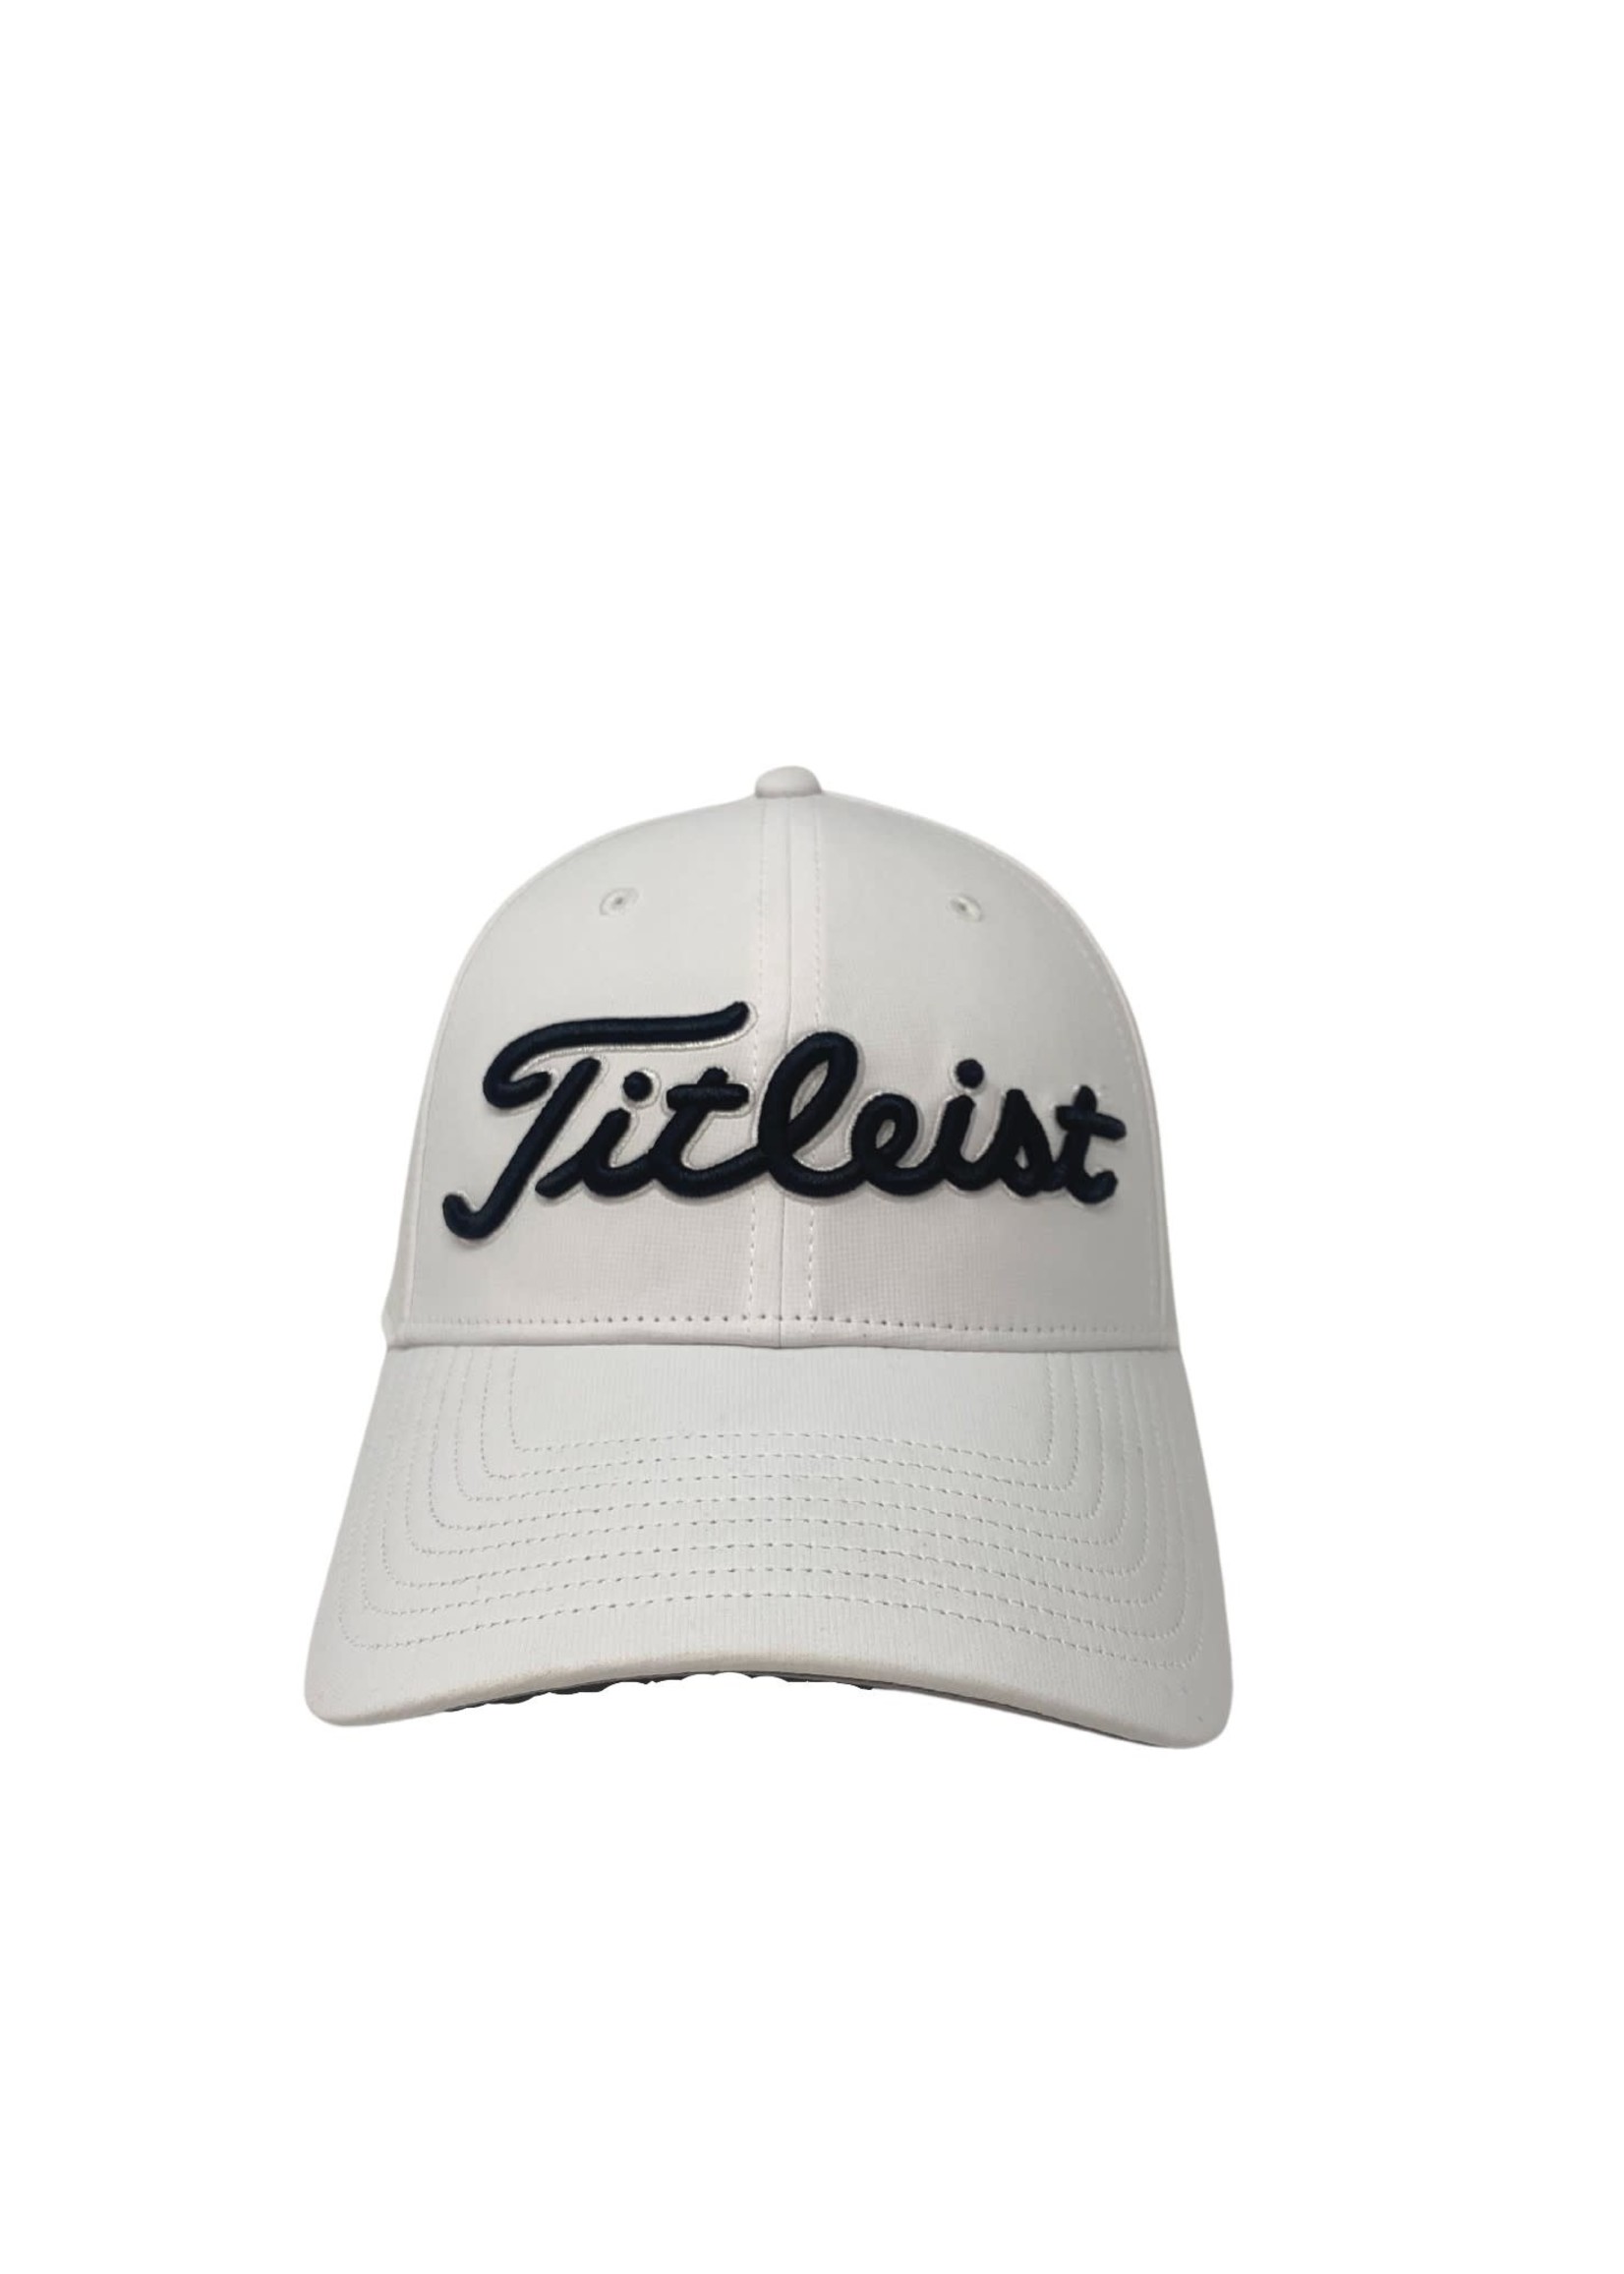 Titleist Bushwood Logo Titleist Baseball Hat